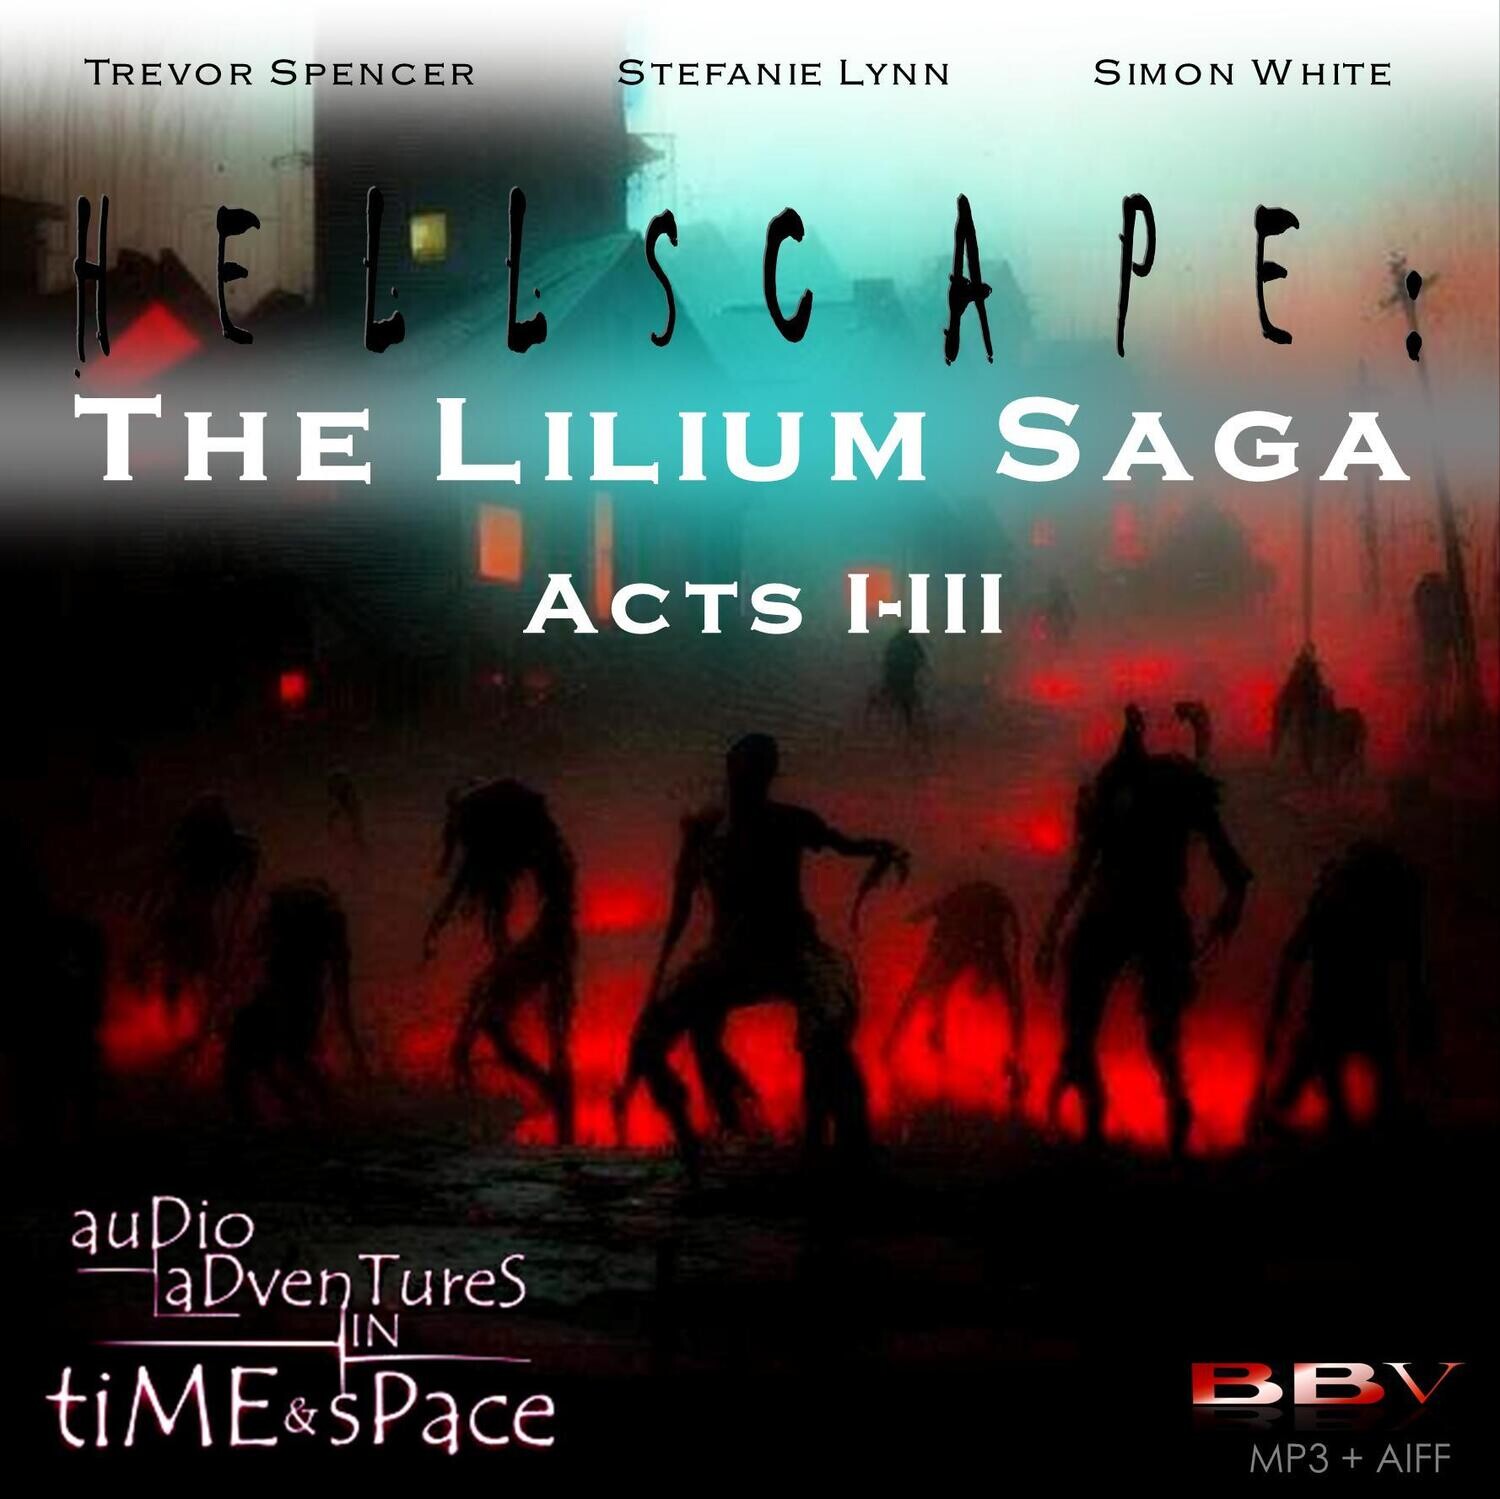 Hellscape: The Lilium Saga - ACTS I-III (AUDIO DOWNLOADS)